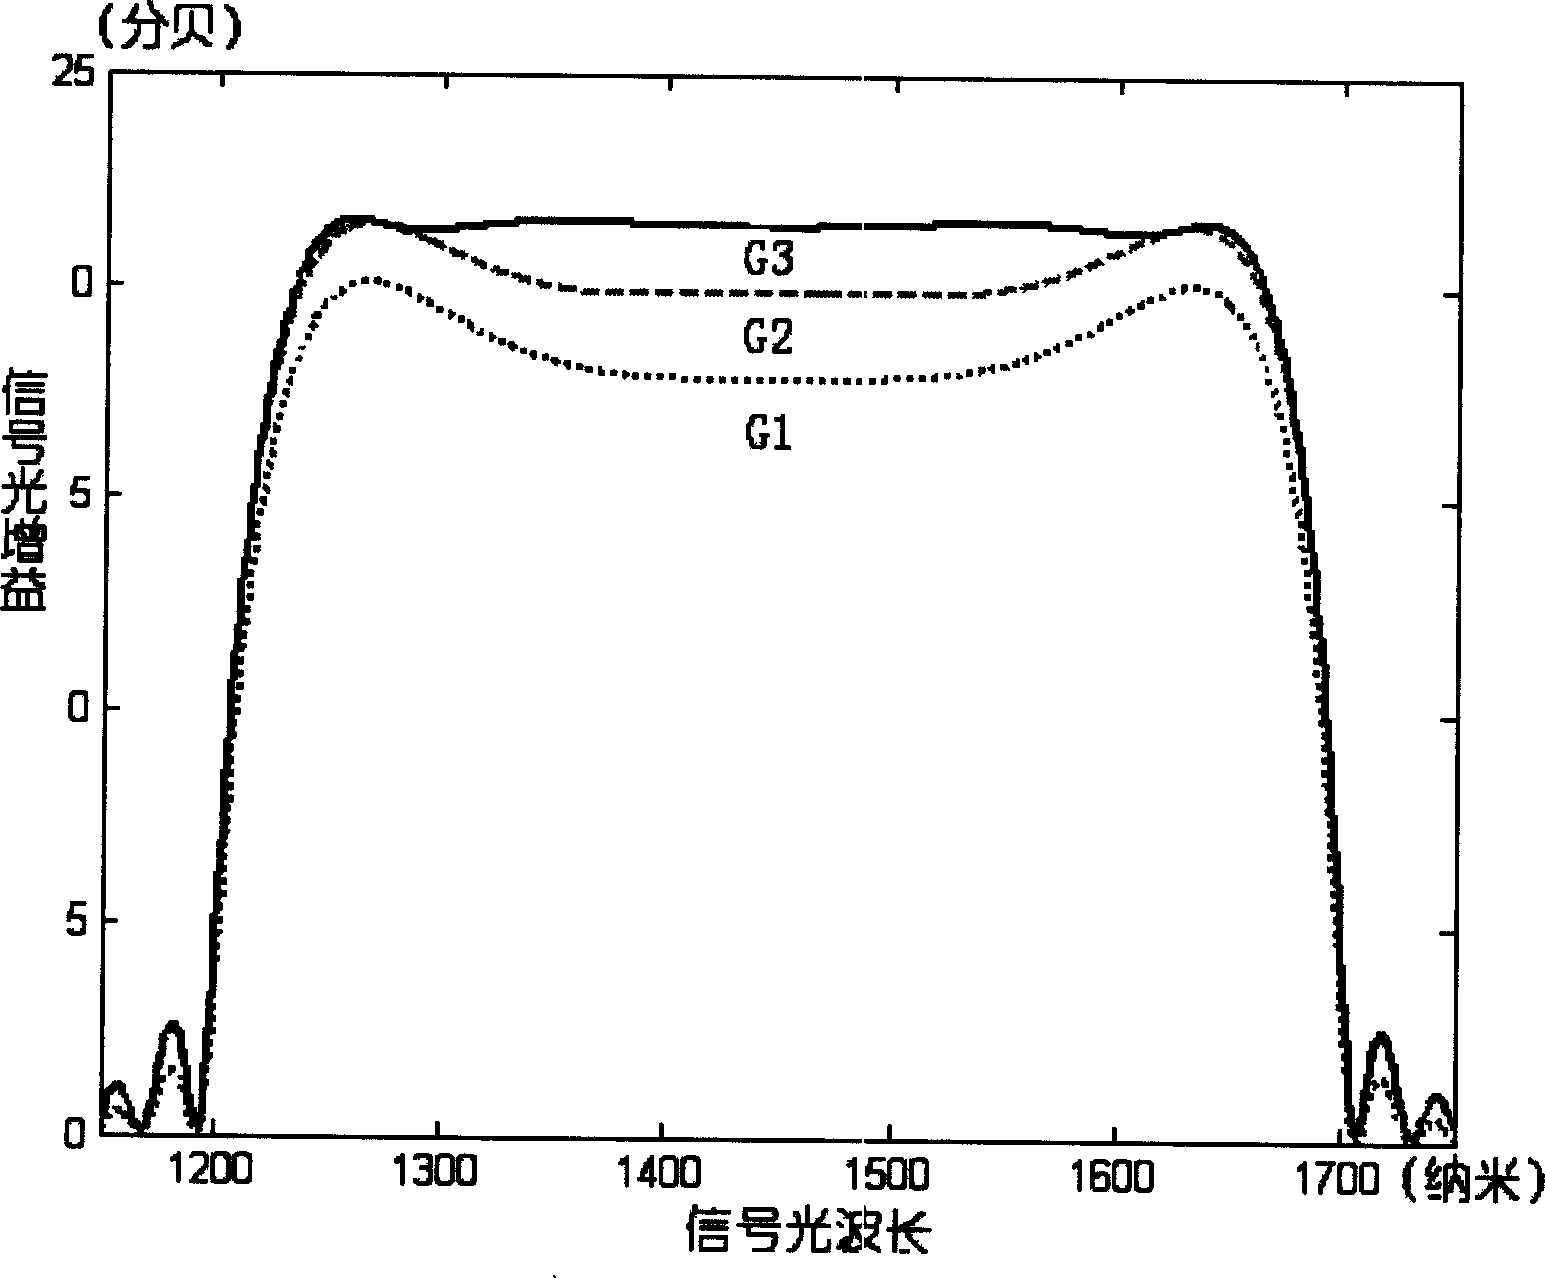 Double pump wide band optical fiber parameter amplifier